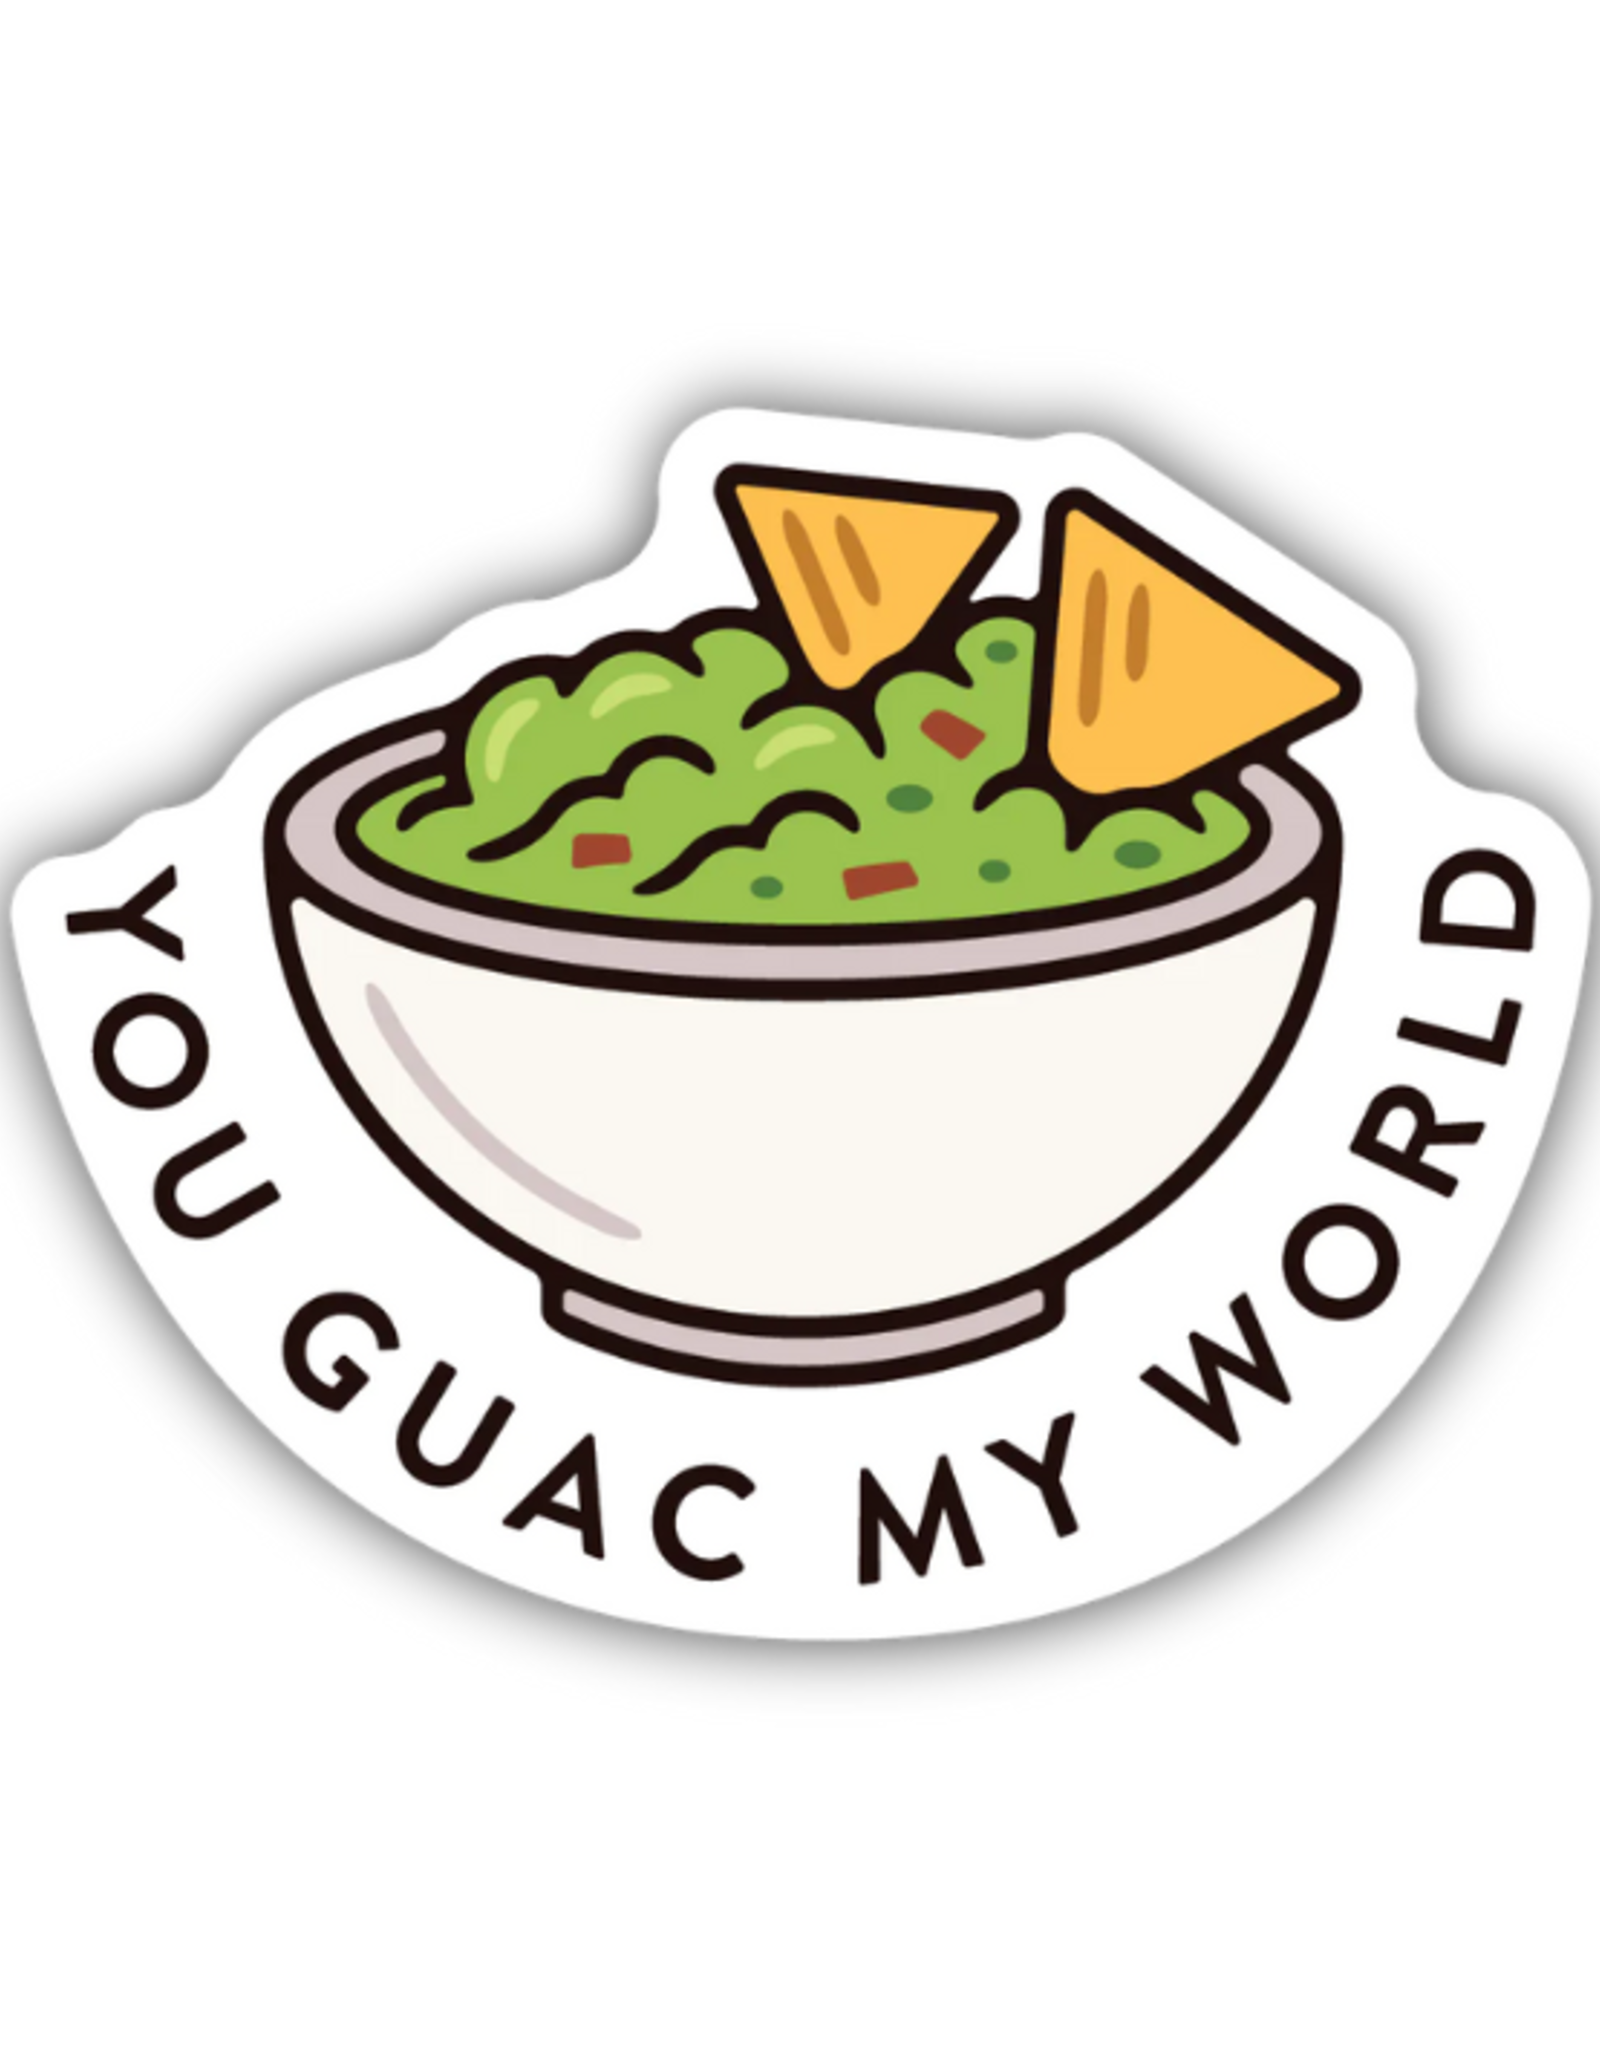 Stickers Northwest Inc. Stickers Northwest Inc - You Guac My World Guacamole Sticker